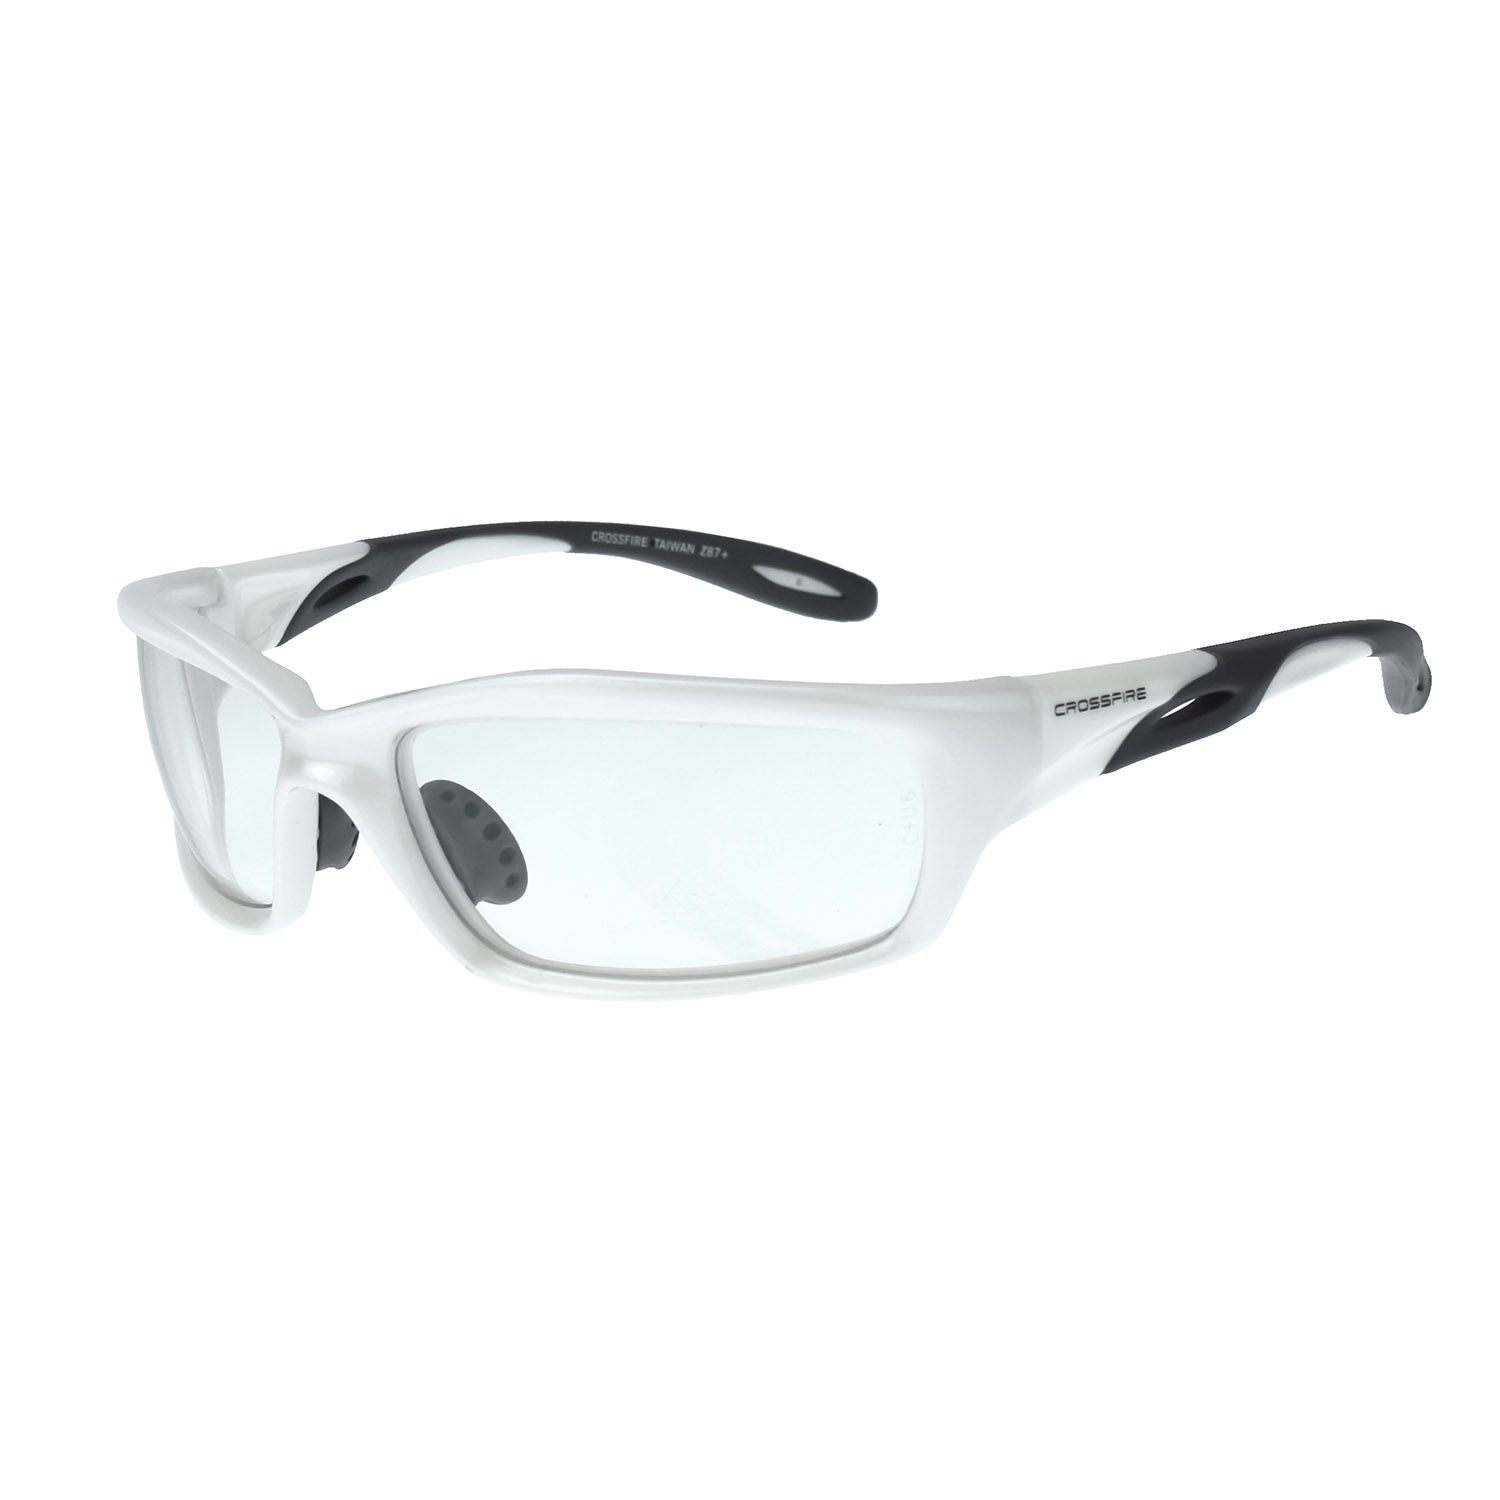 Crossfire Infinity Smoke Lens & Black Crystal Frame Safety Glasses Each 